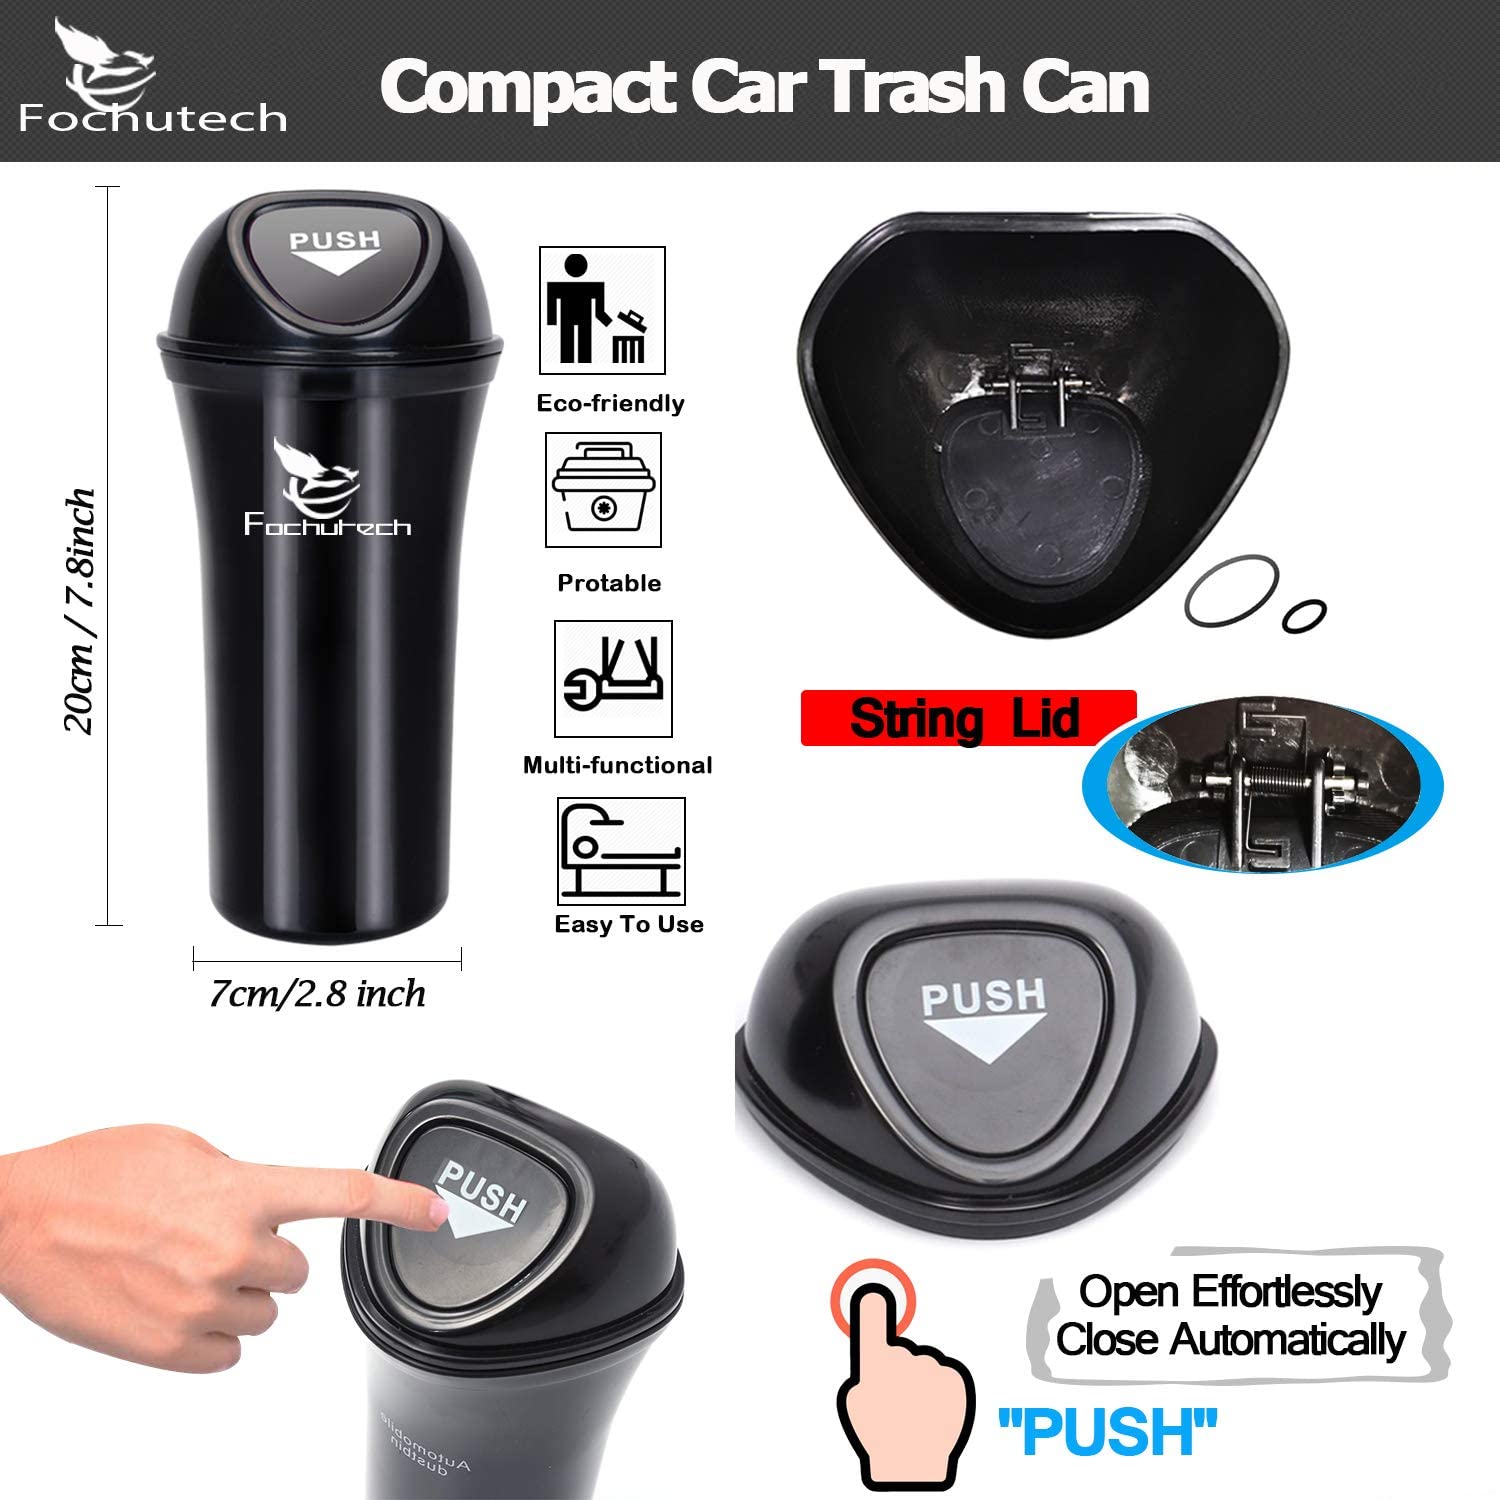 Car Dustbin